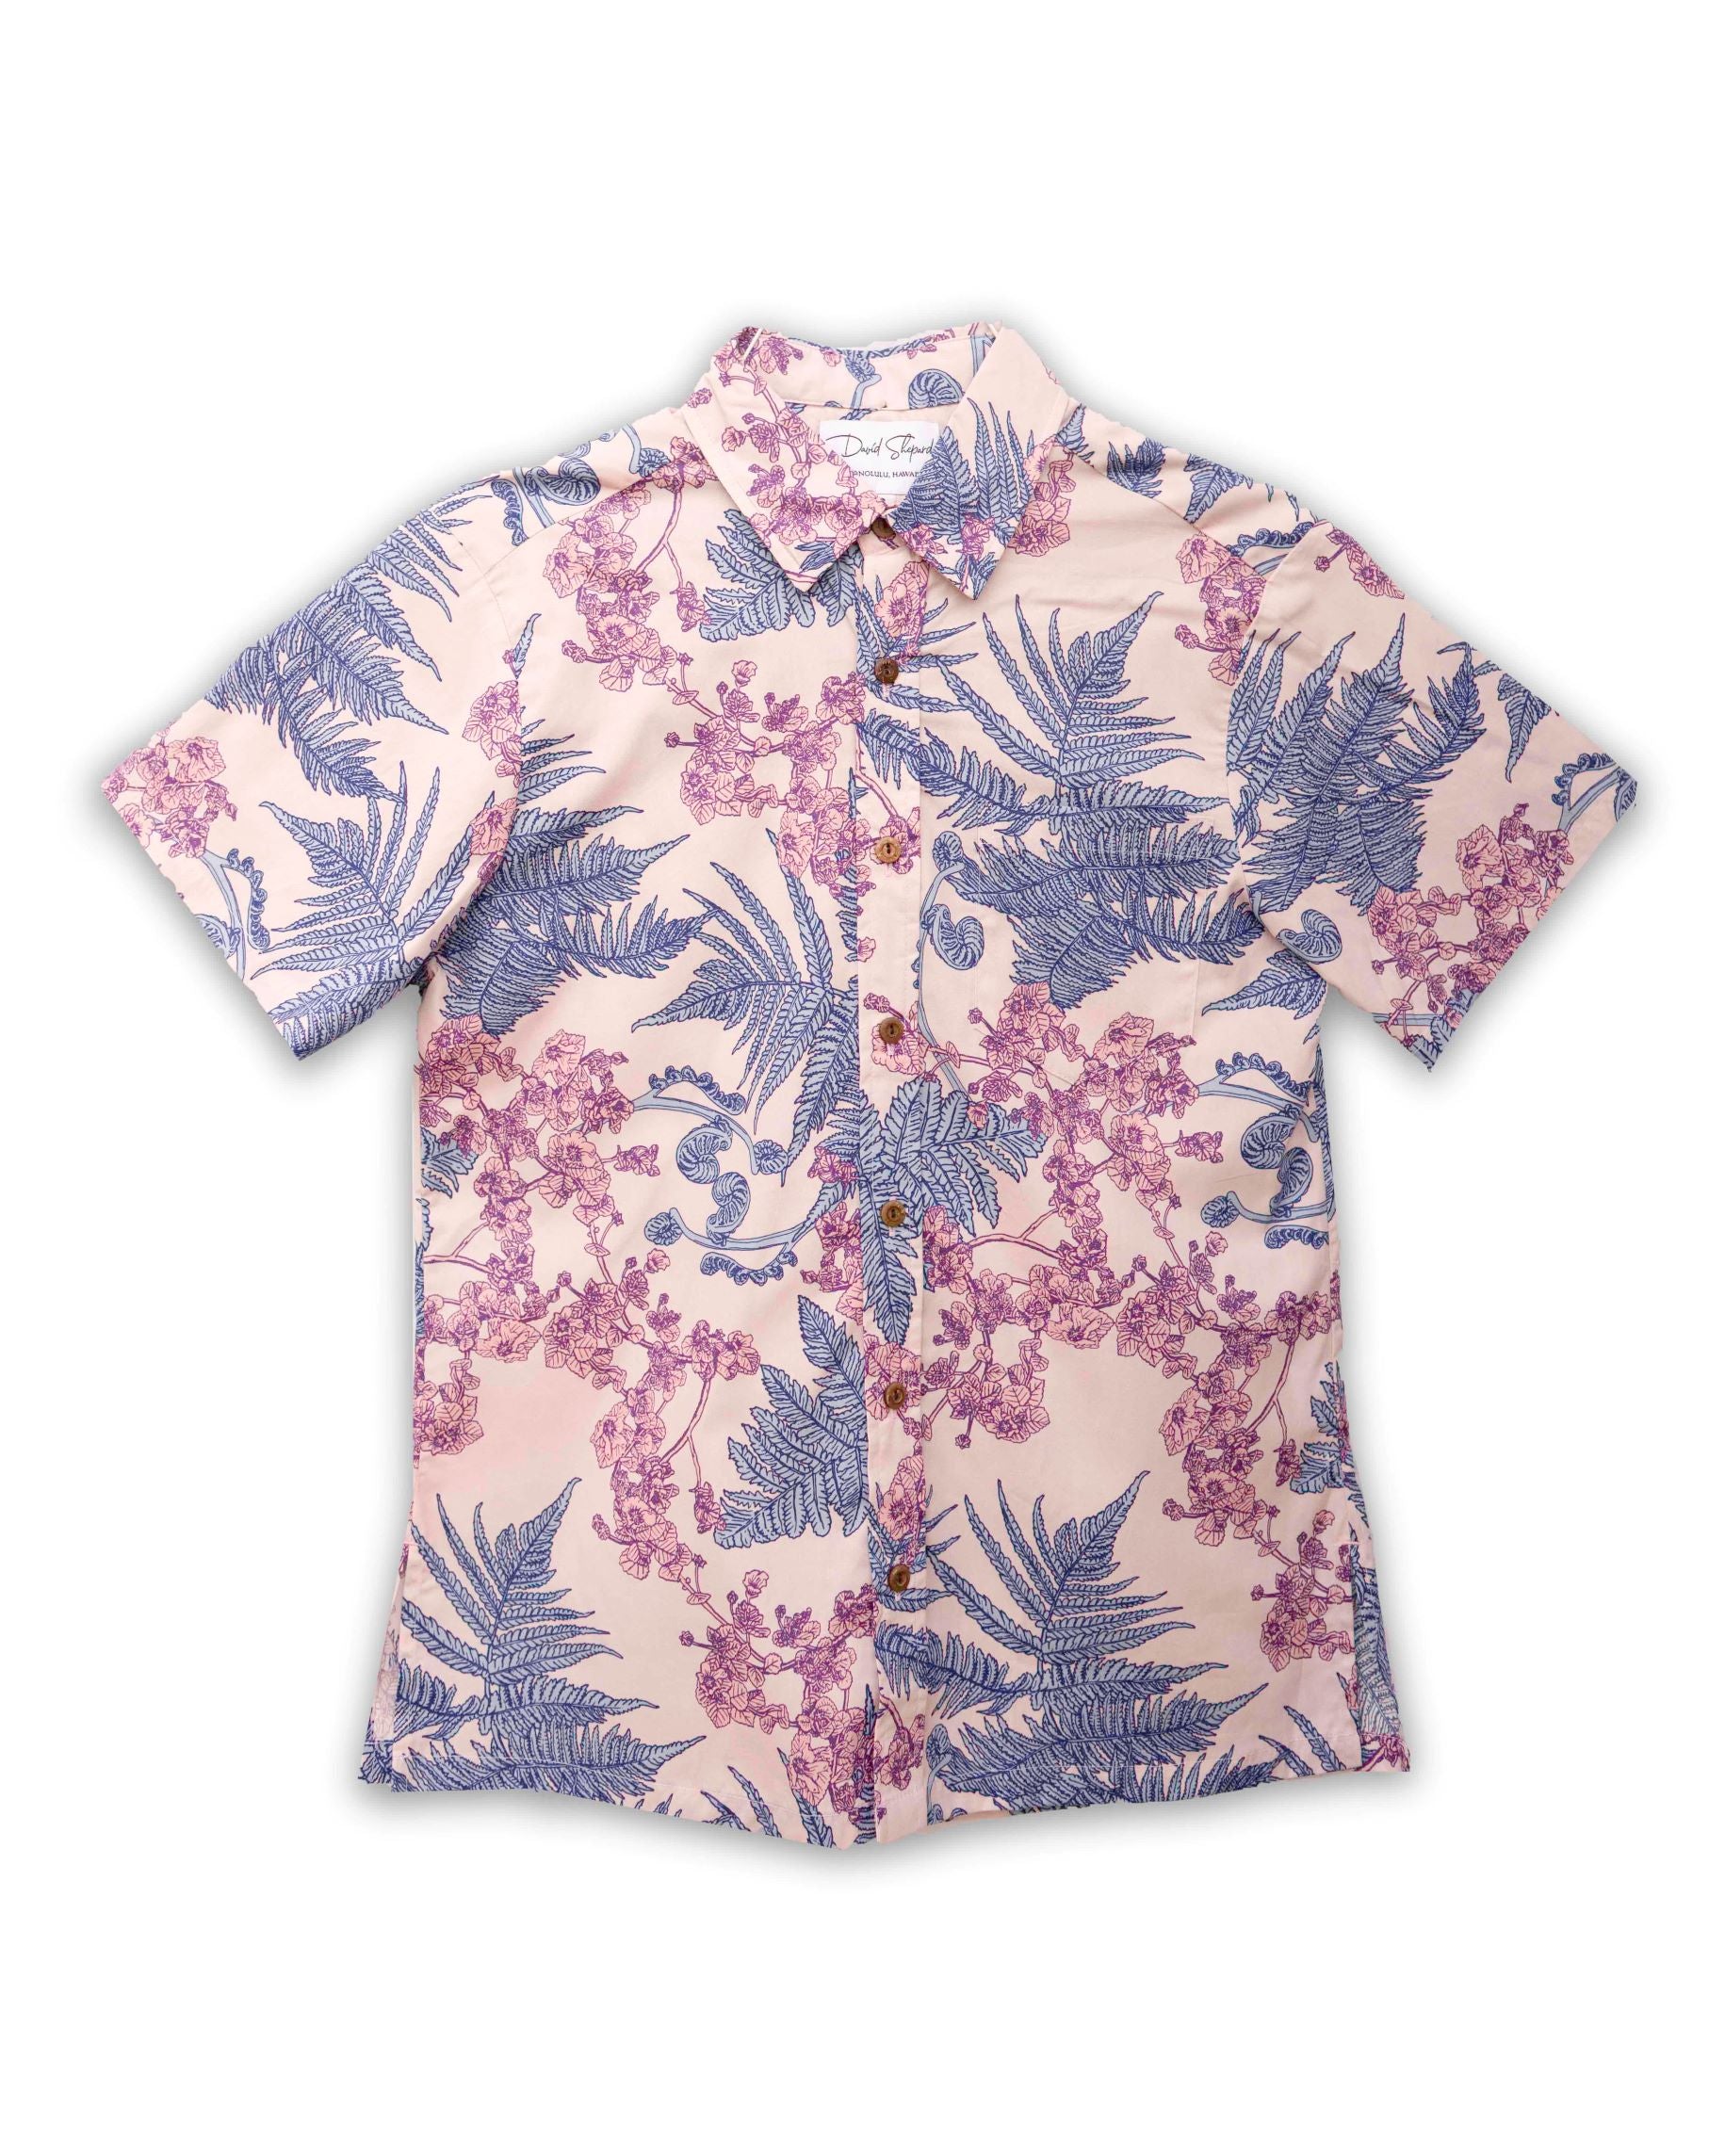 Pop-Up Mākeke - David Shepard Hawaii - Hāpuʻu ʻIlima Mauka to Makai Lavender Men's Aloha Shirt - Front View